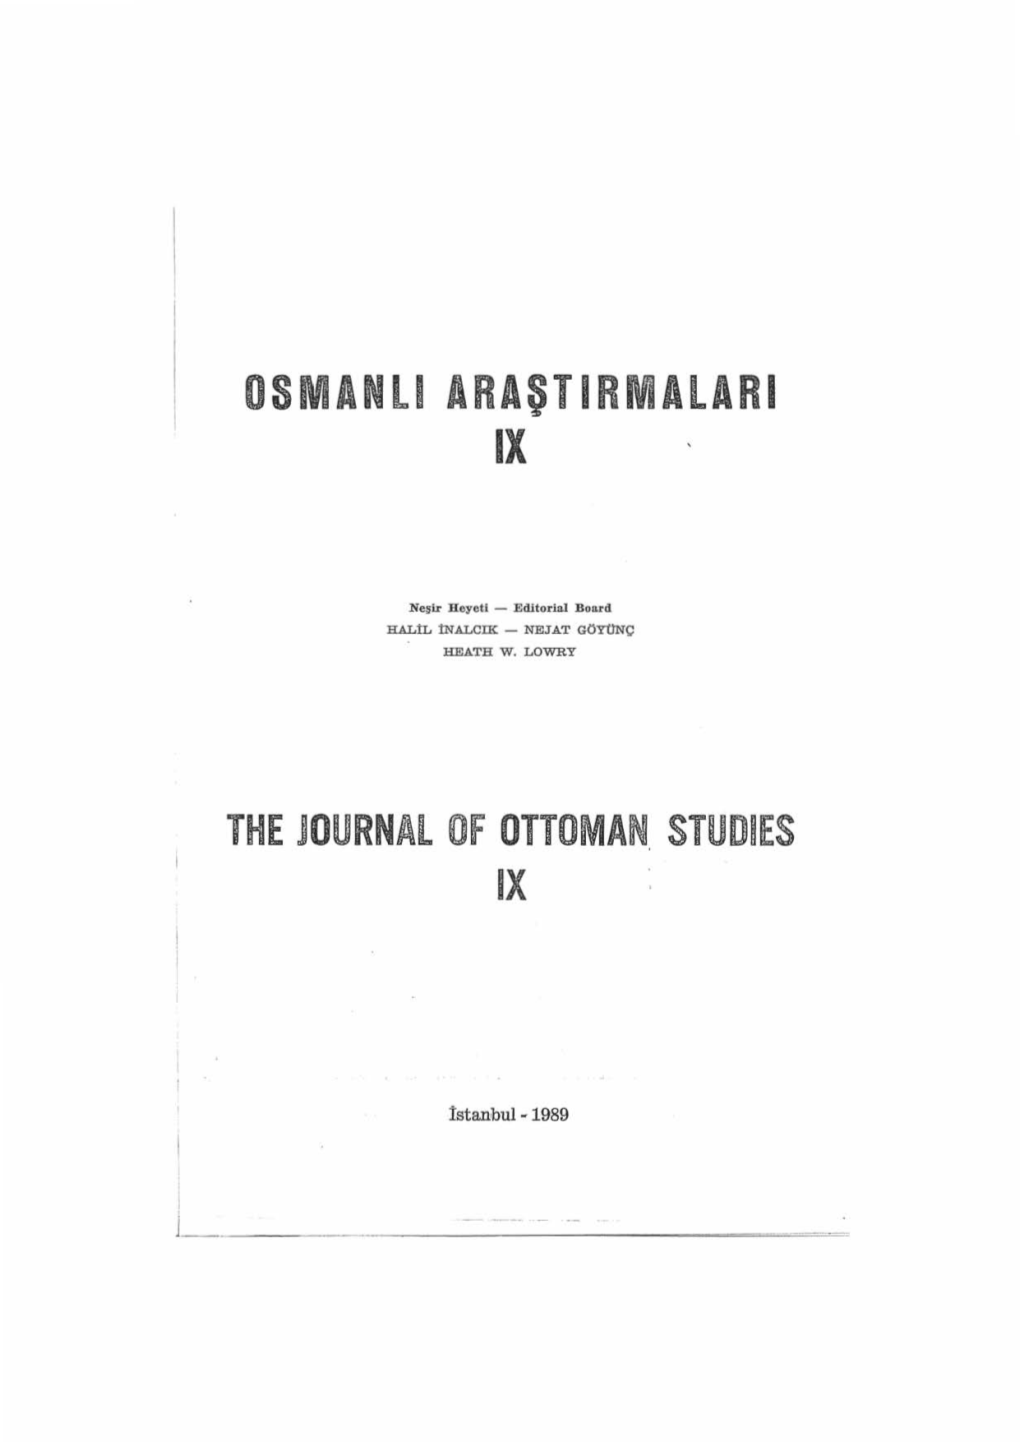 The Journal of Ottoman. Studies Ix